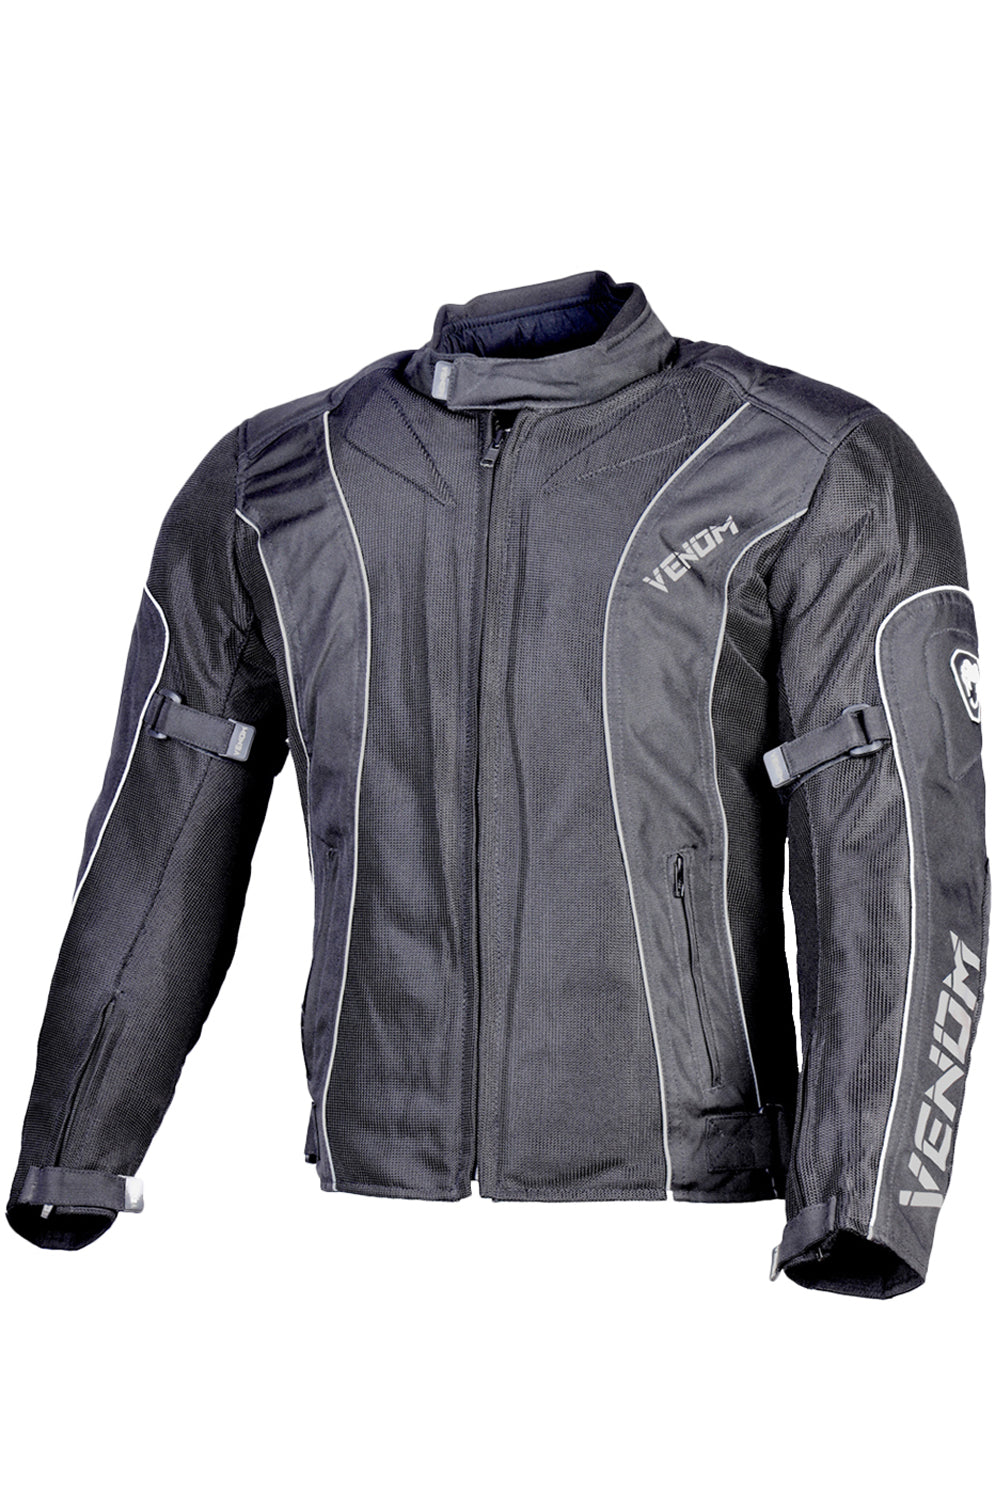 VENOMV color leather riders jacket - ジャケット・アウター